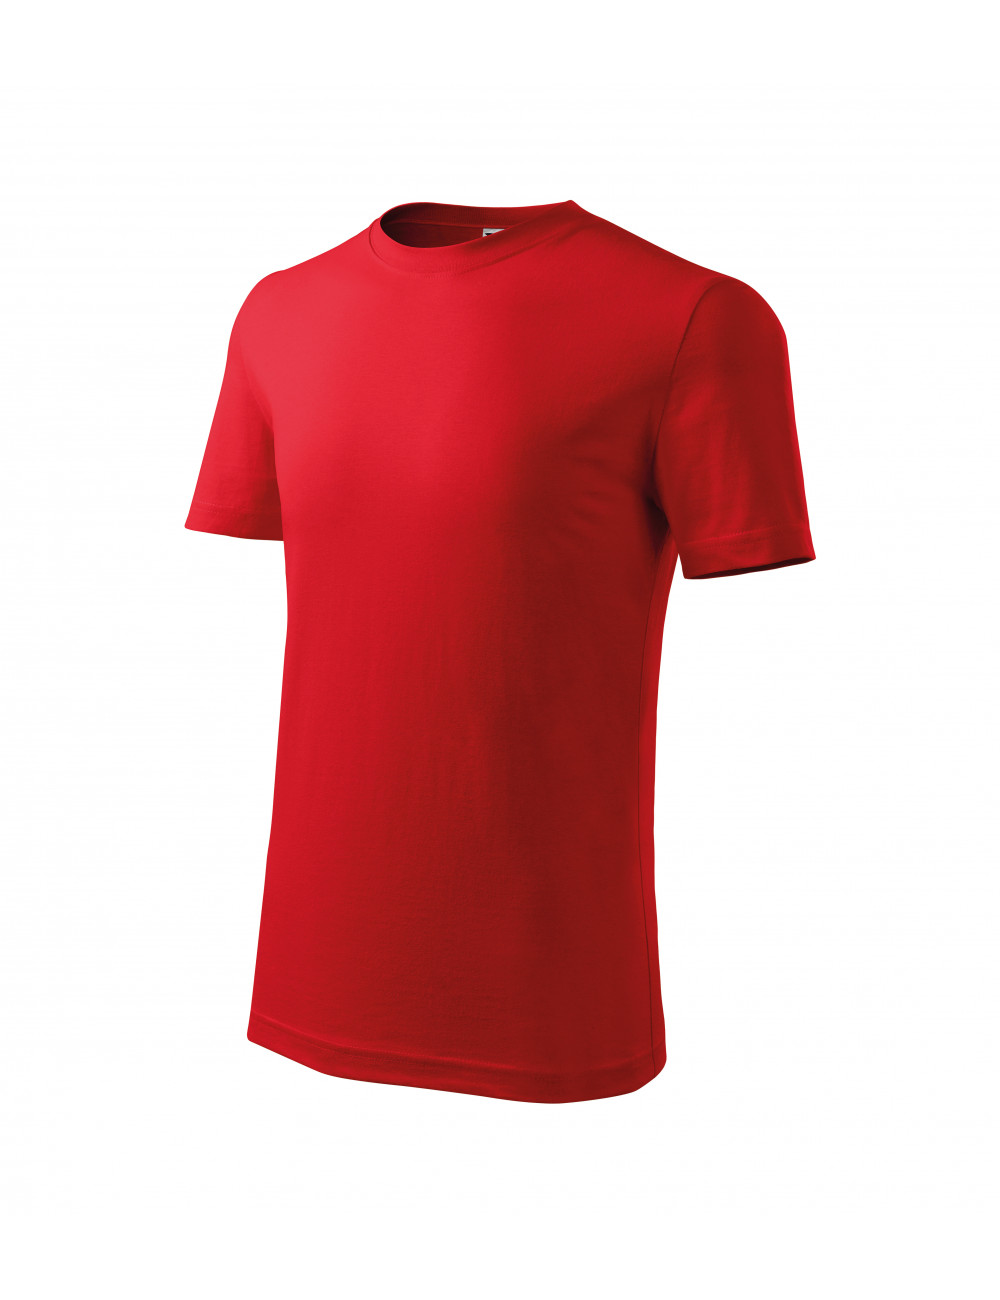 Children`s t-shirt classic new 135 red Adler Malfini